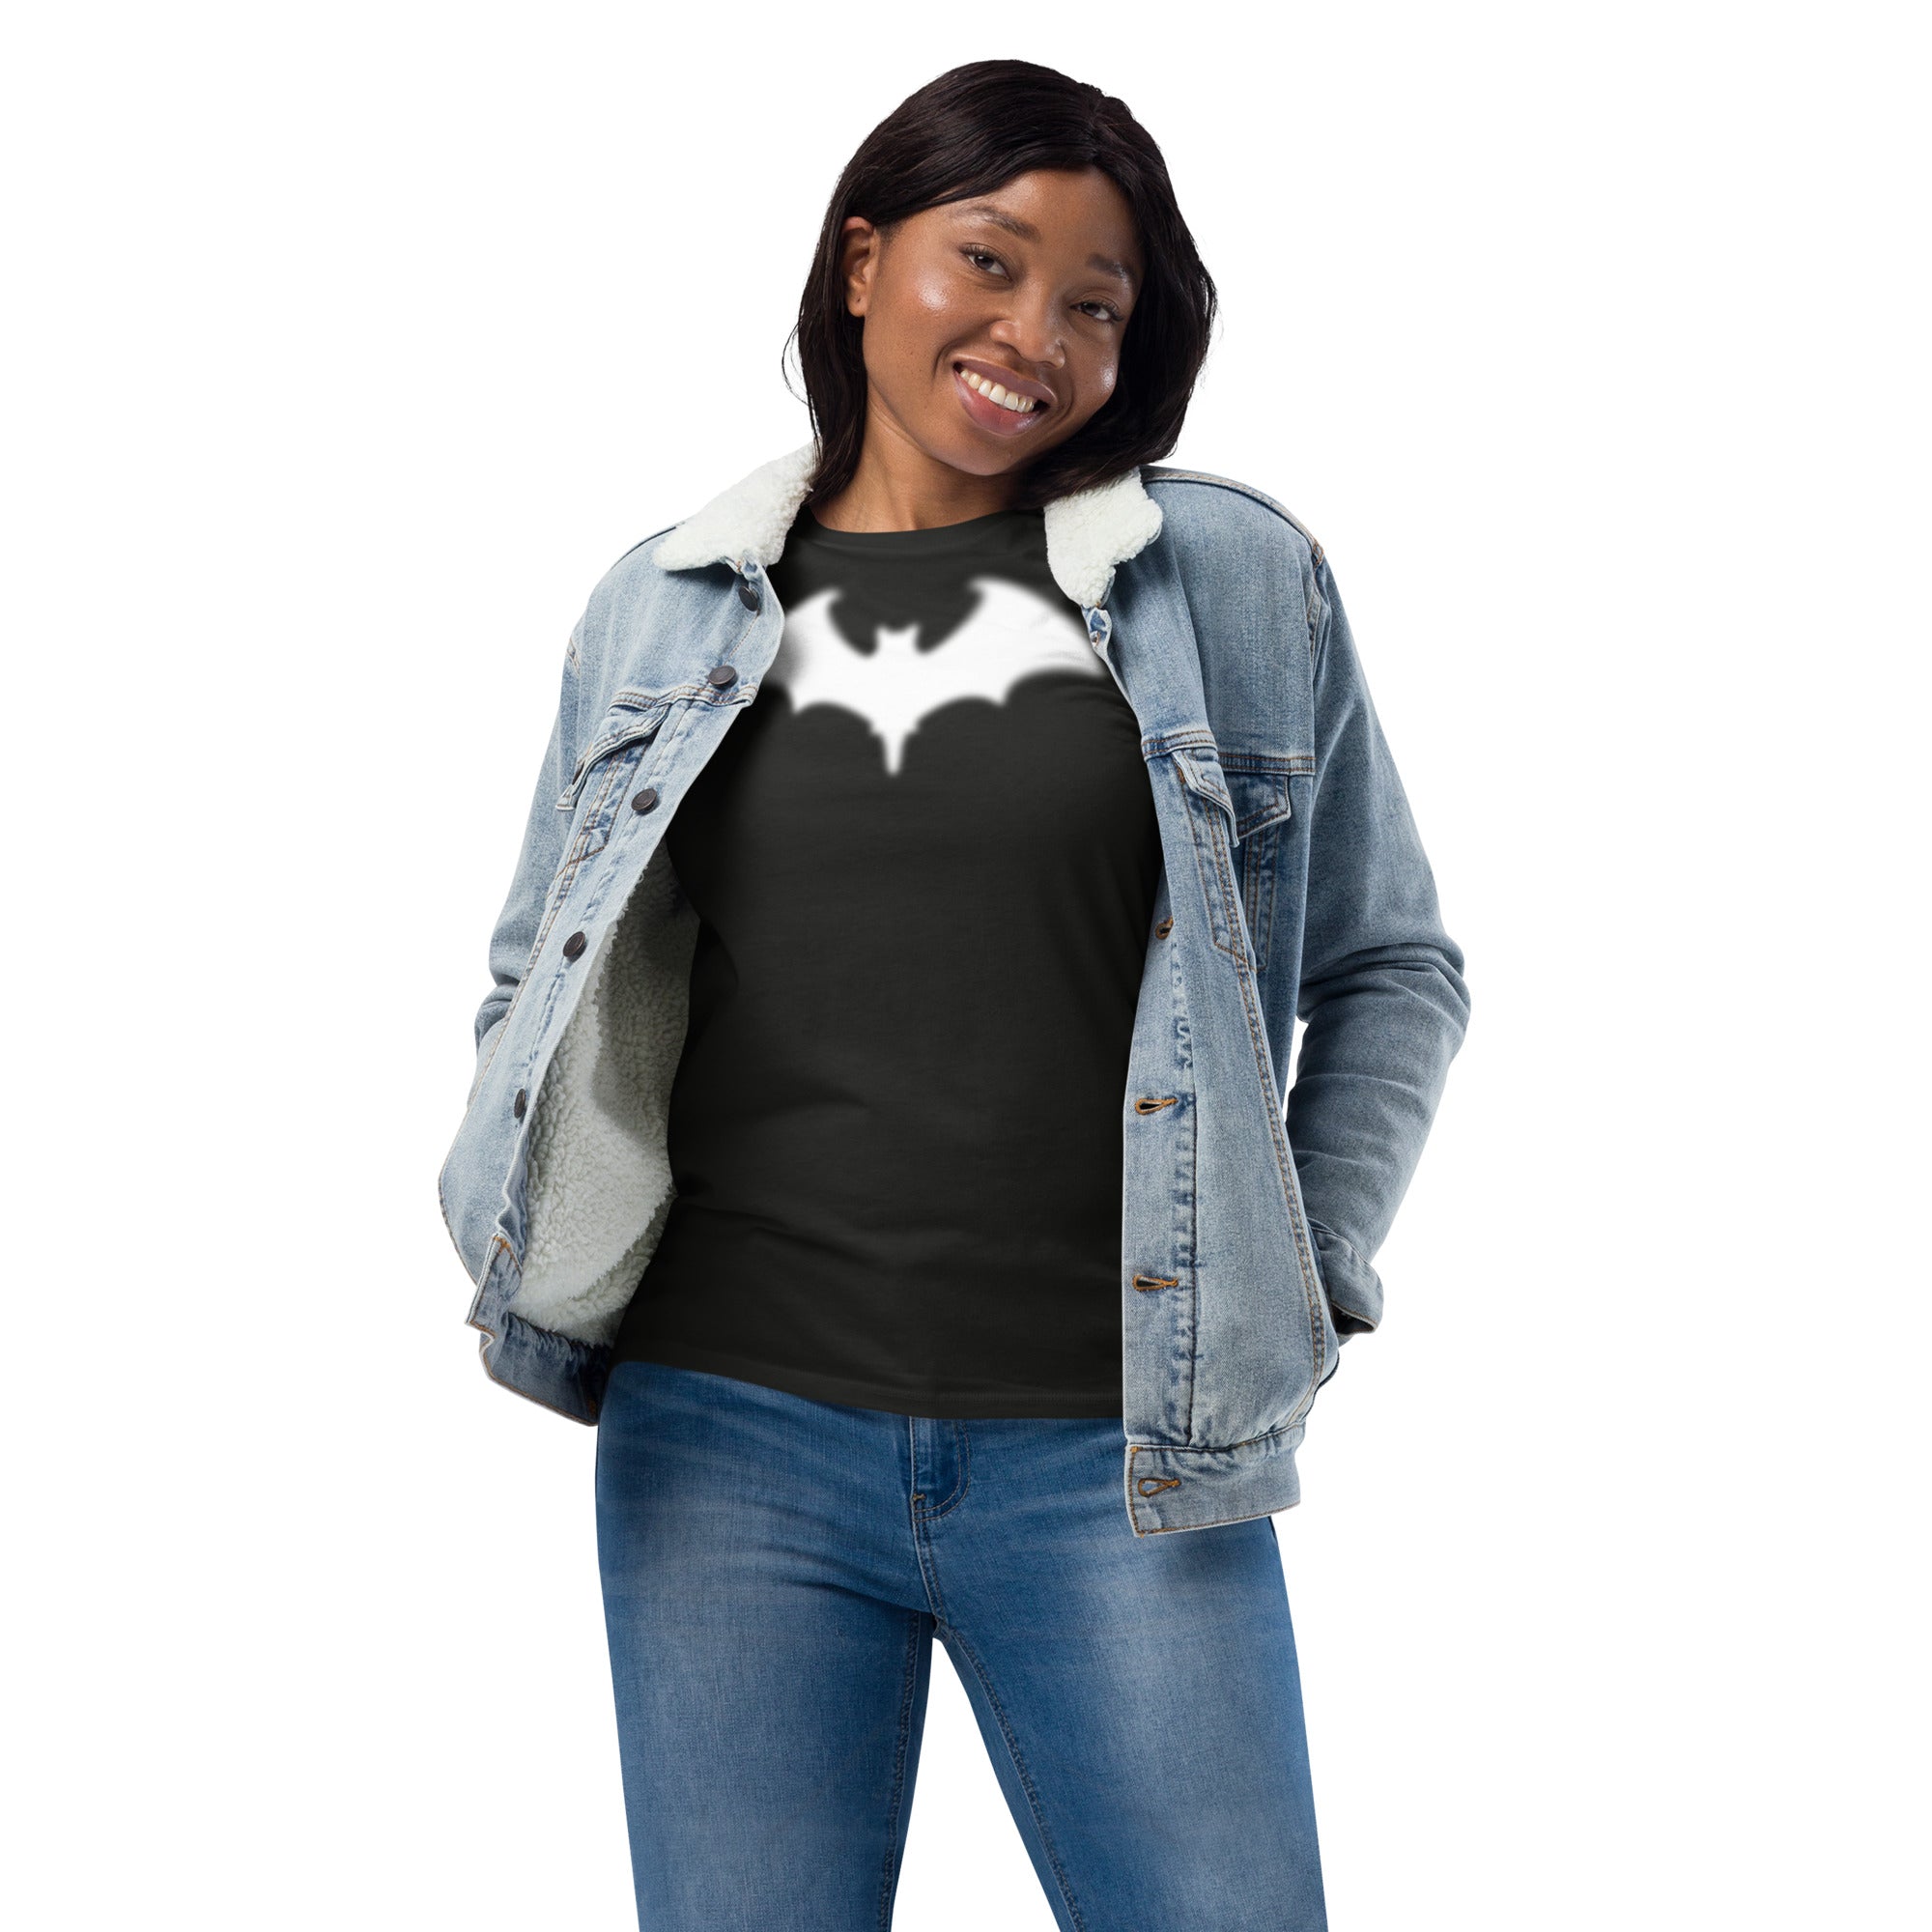 Blurry Bat Halloween Goth Women's Fashion Long Sleeve Shirt - Edge of Life Designs